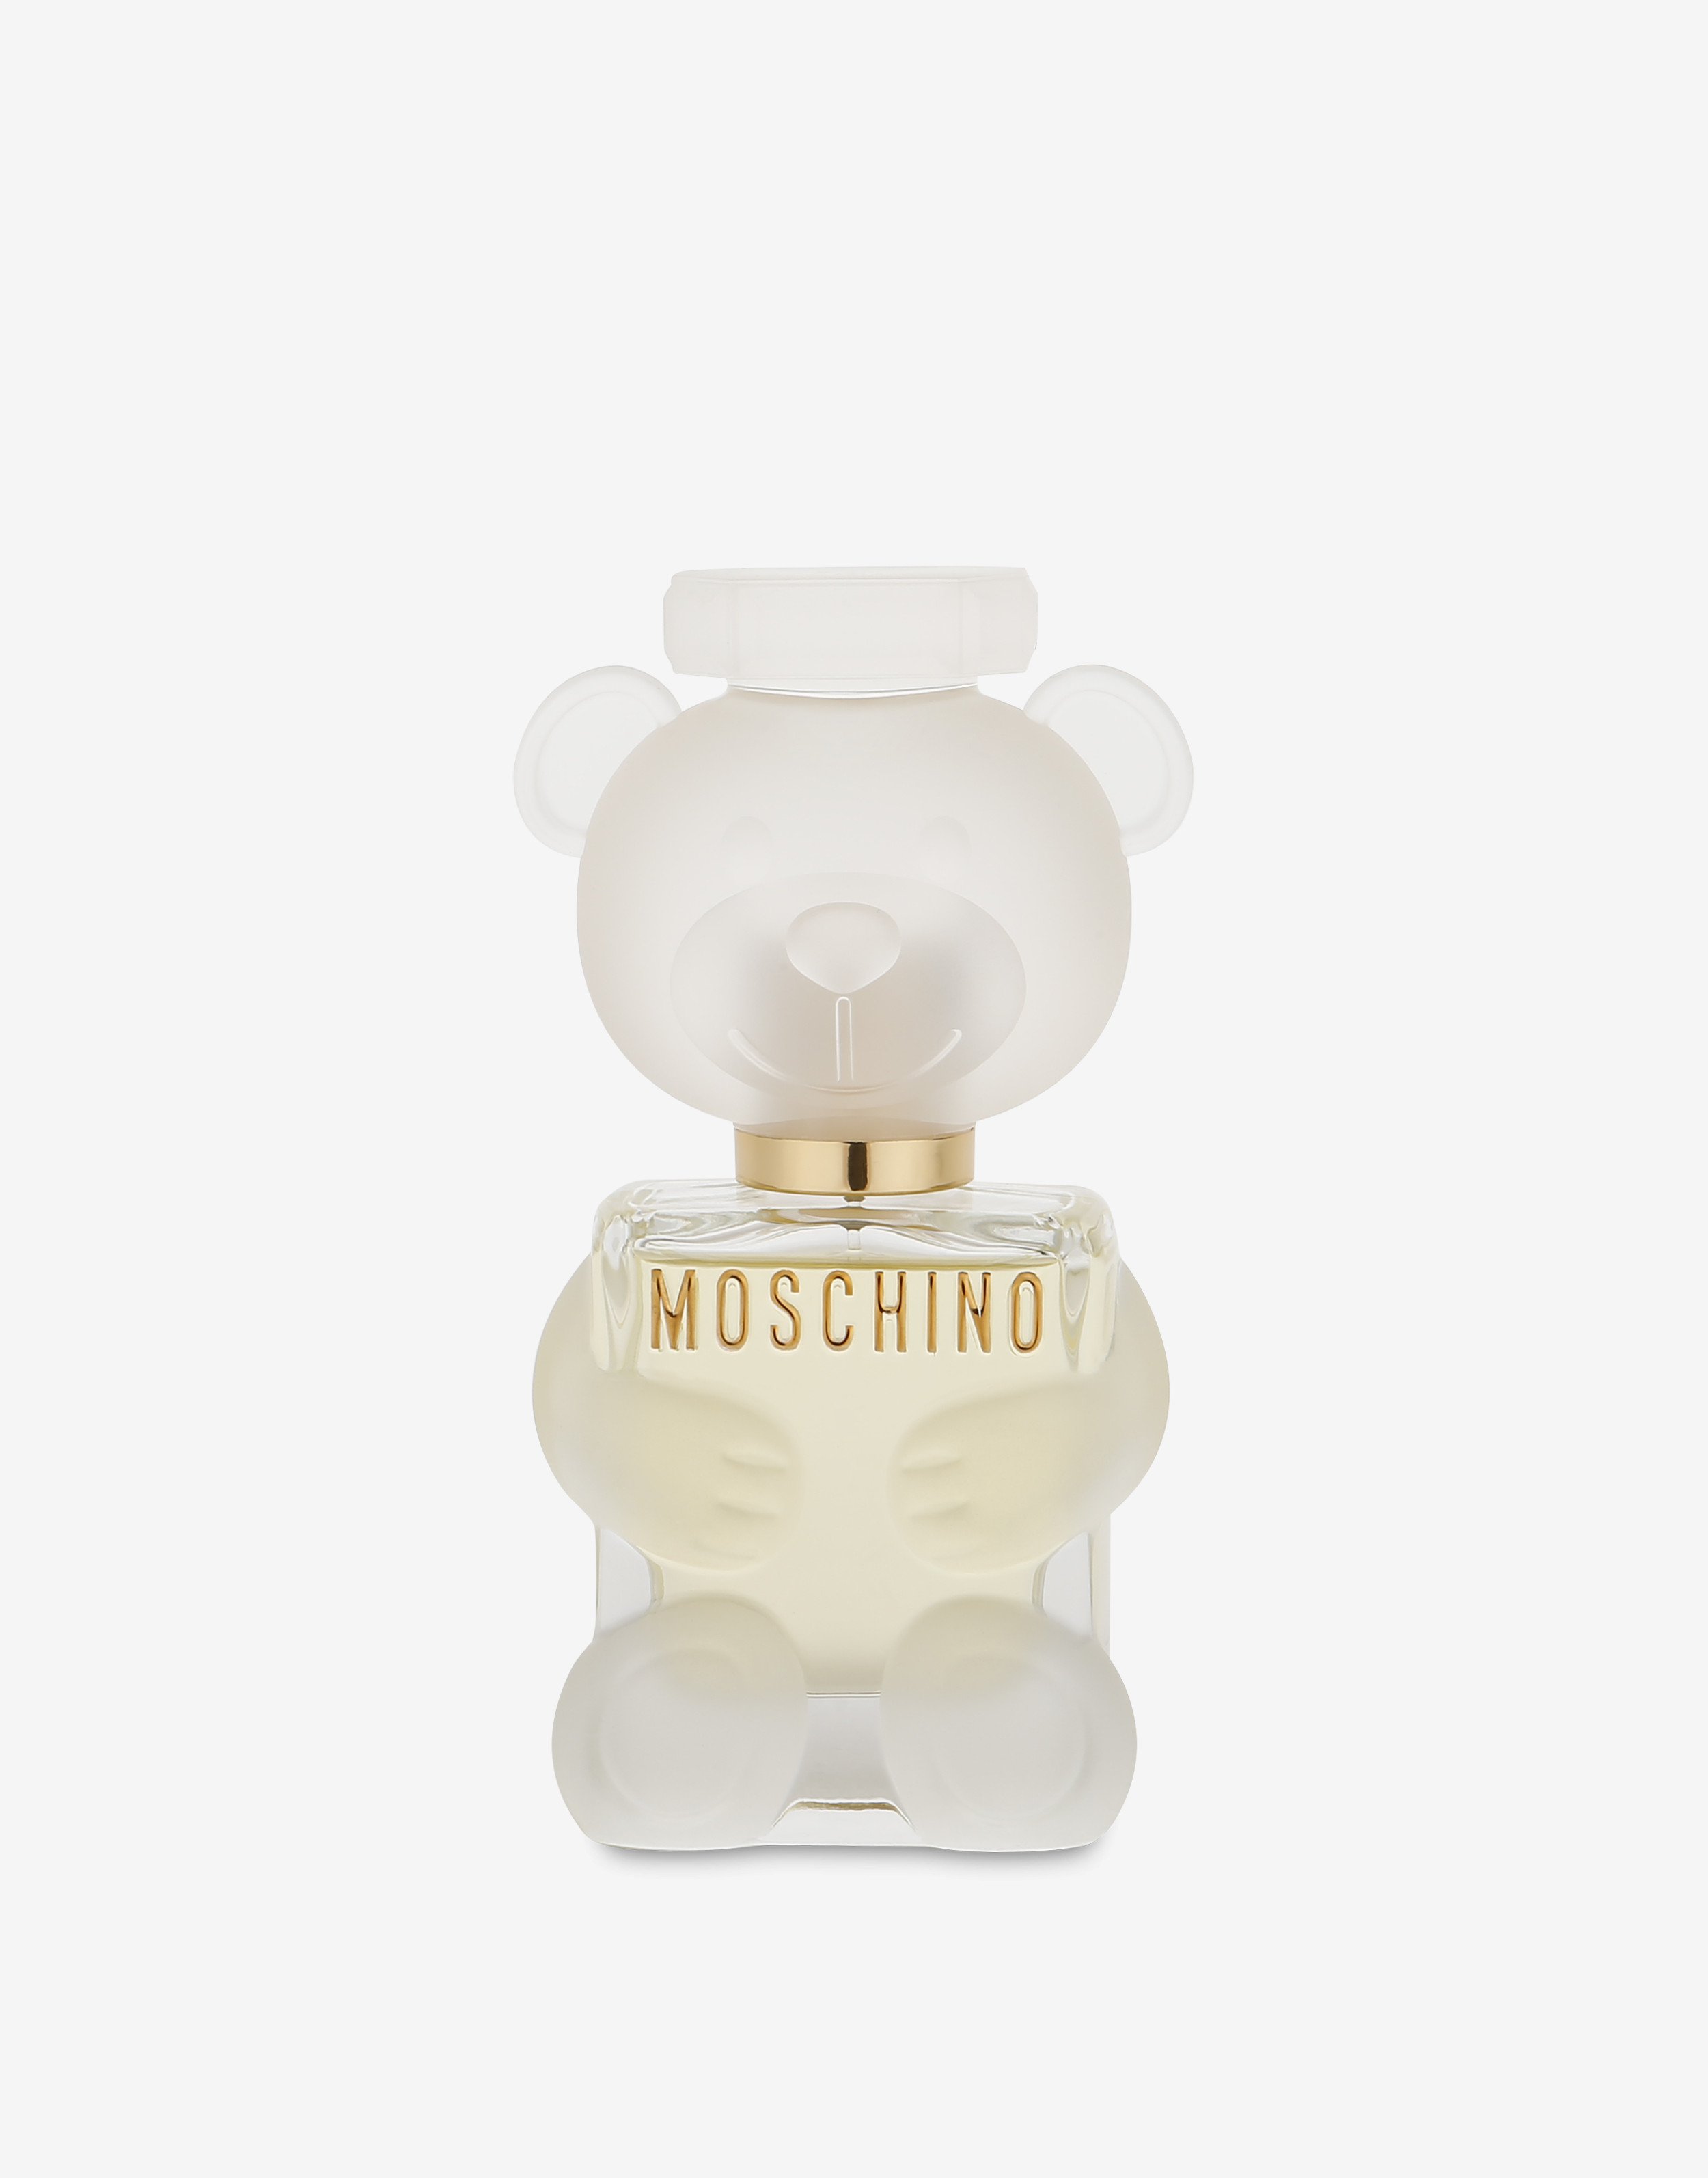 moschino toy 1 parfum